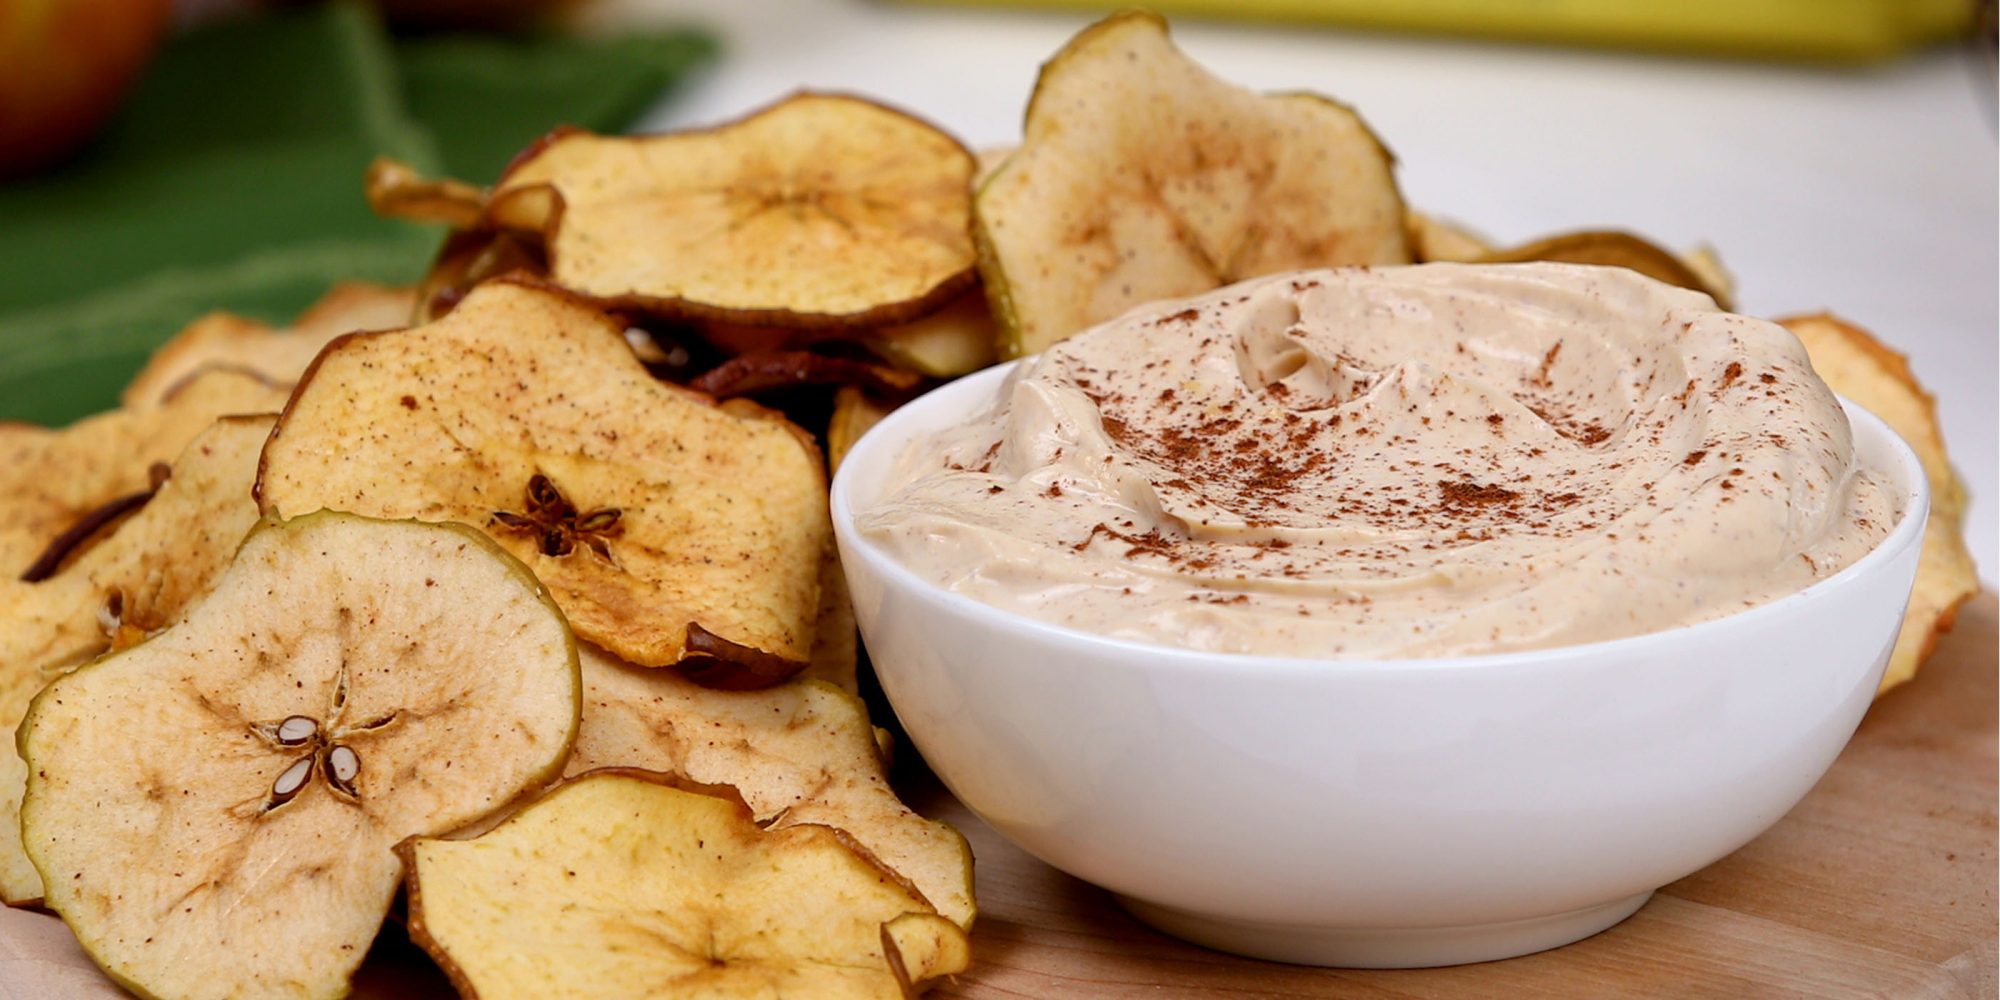 Cinnamon Apple Chips with Peanut Butter Yogurt Dip